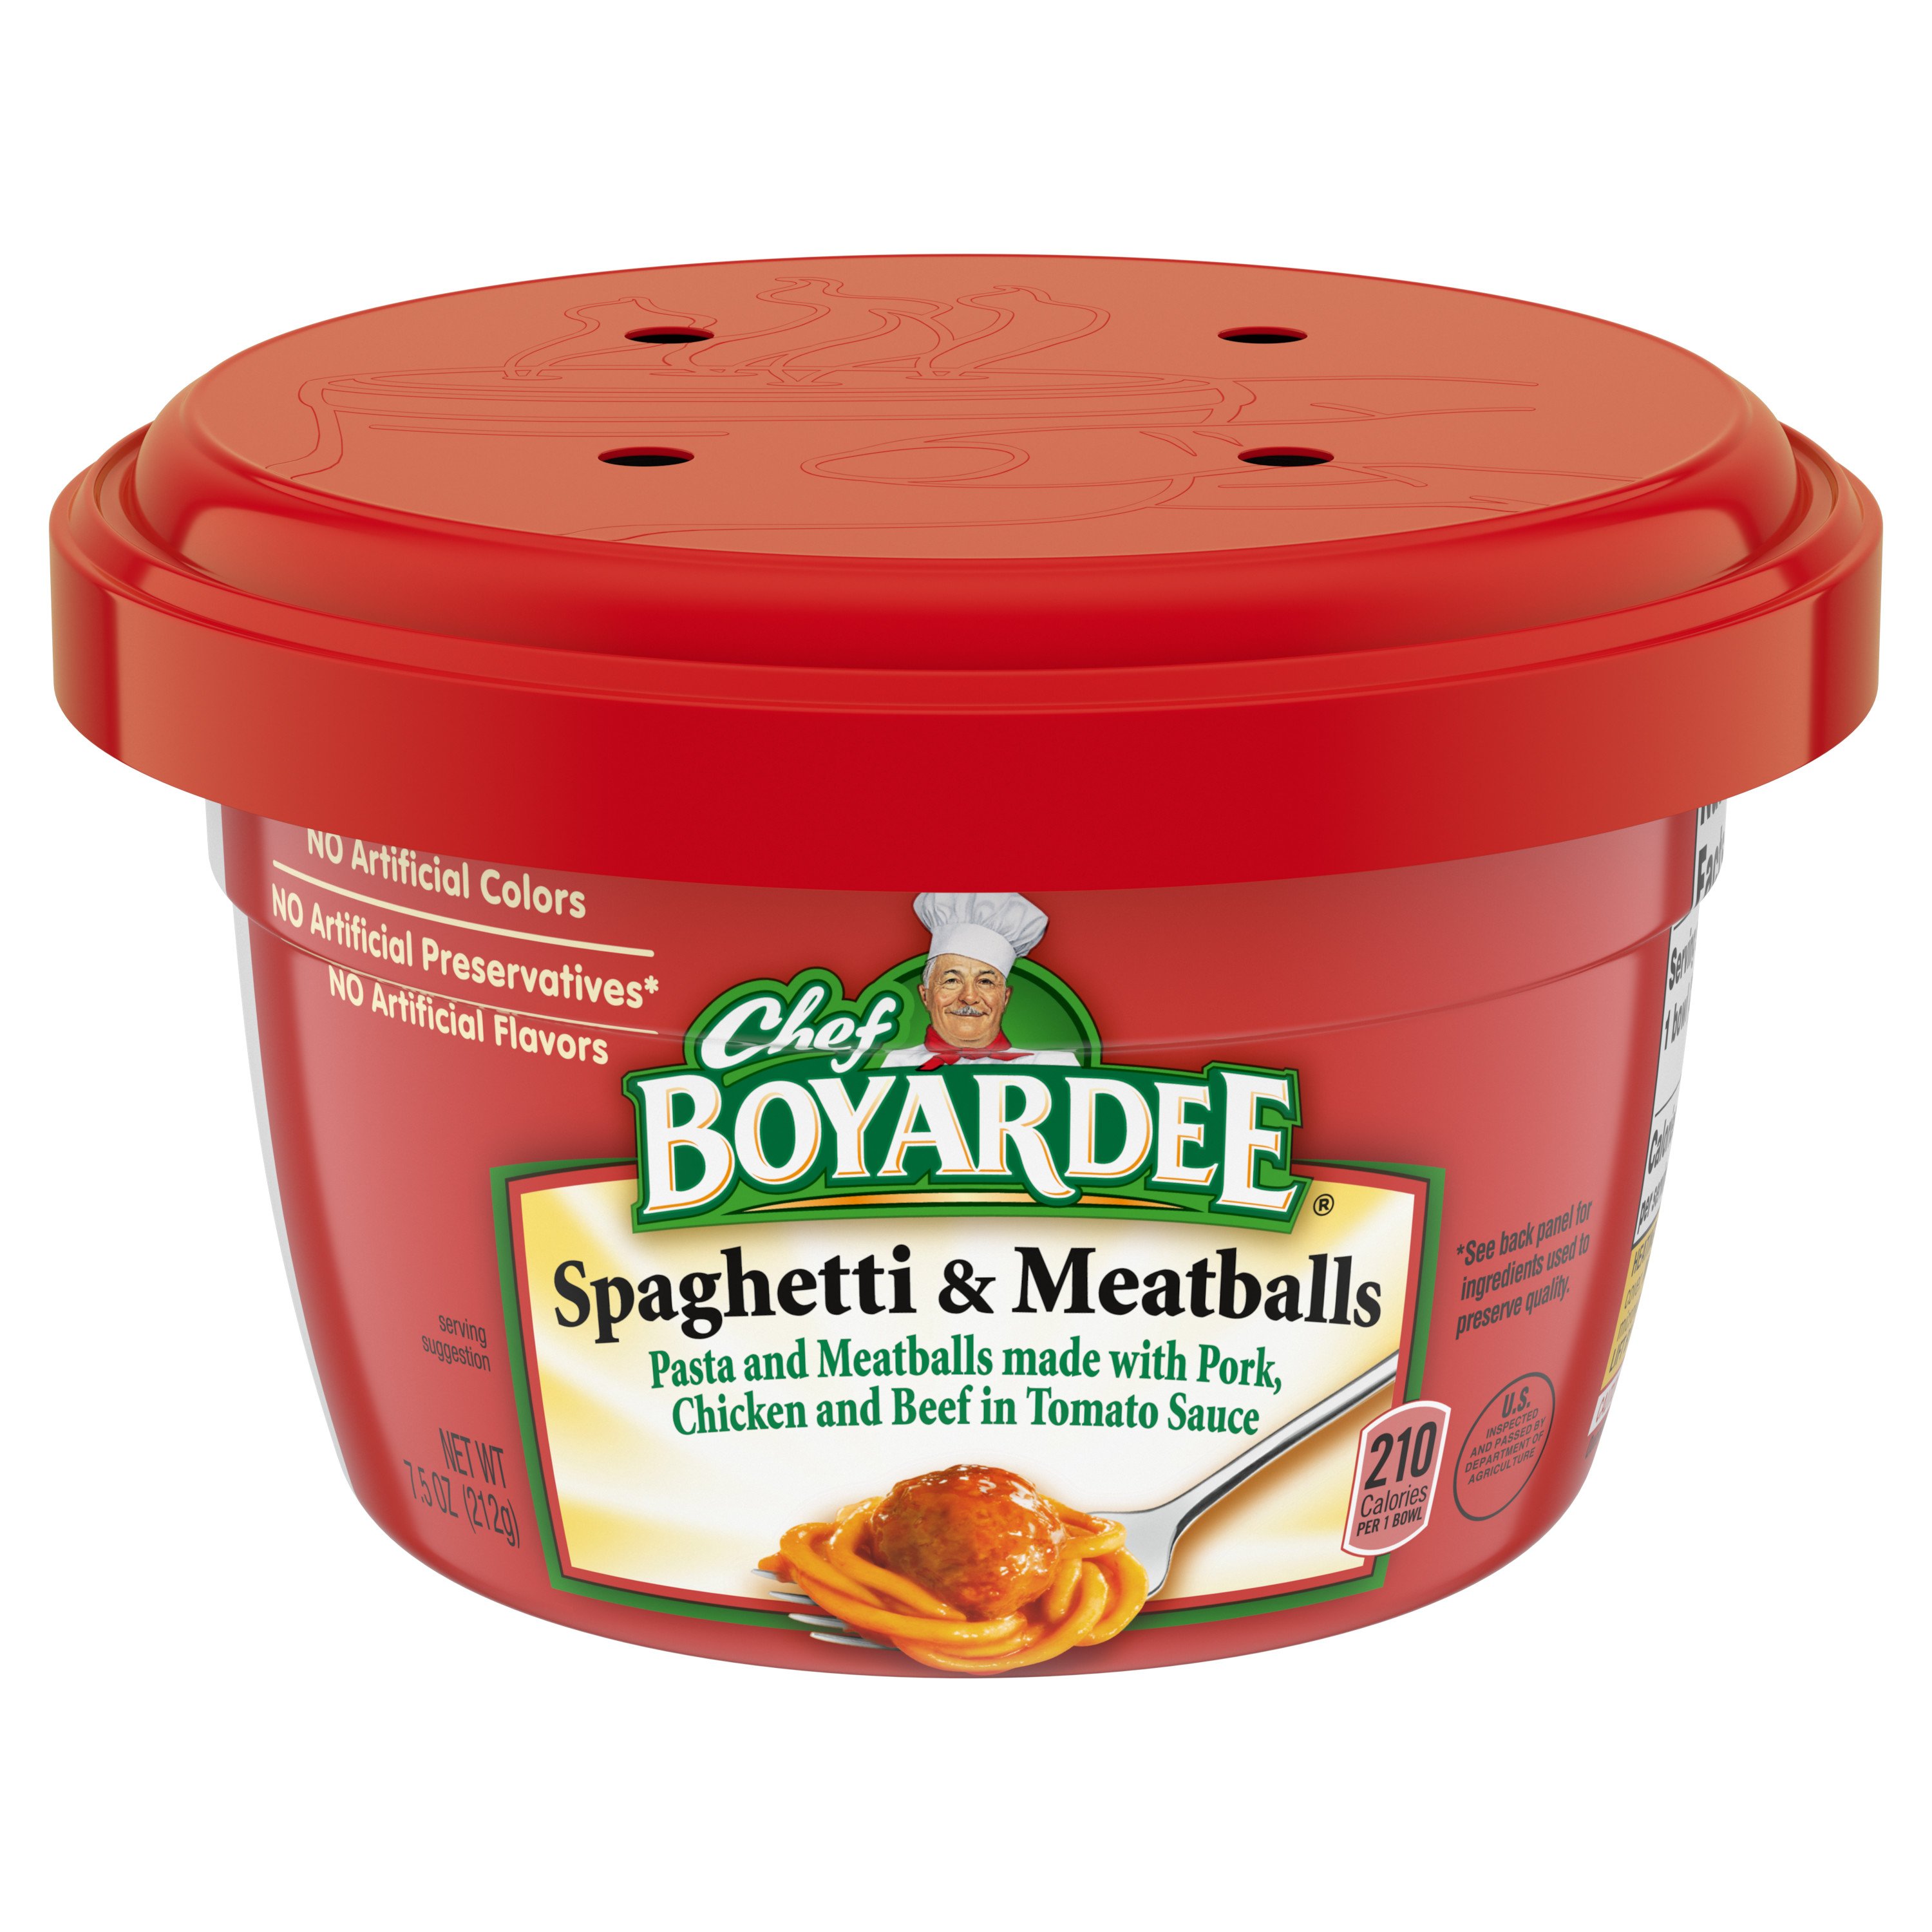 Chef Boyardee Spaghetti & Meatballs in Tomato Sauce - Shop Pantry Meals ...